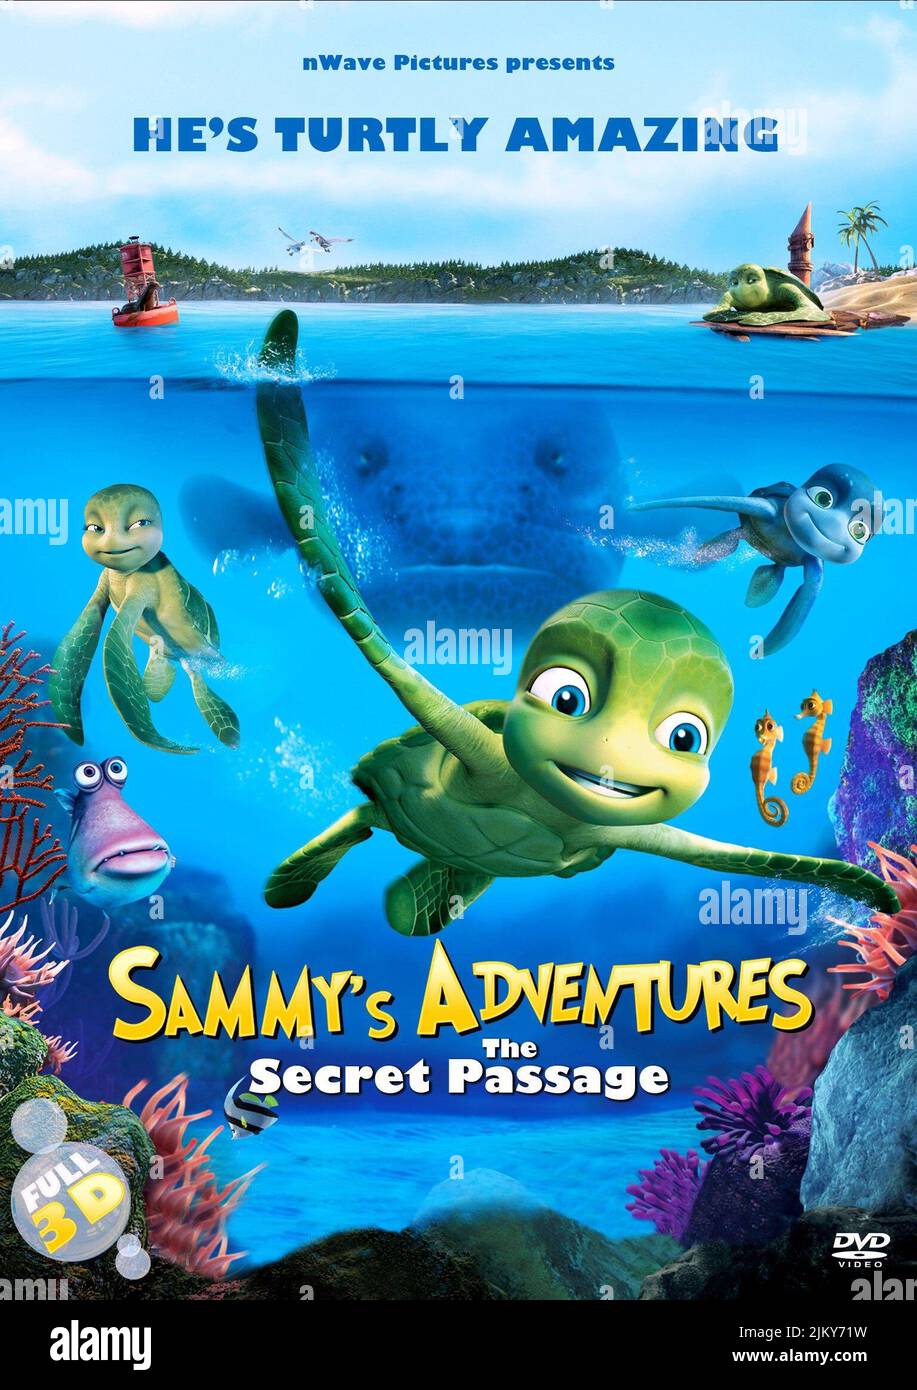 https://c8.alamy.com/comp/2JKY71W/sammy-poster-a-turtles-tale-sammys-adventures-the-secret-passage-2010-2JKY71W.jpg